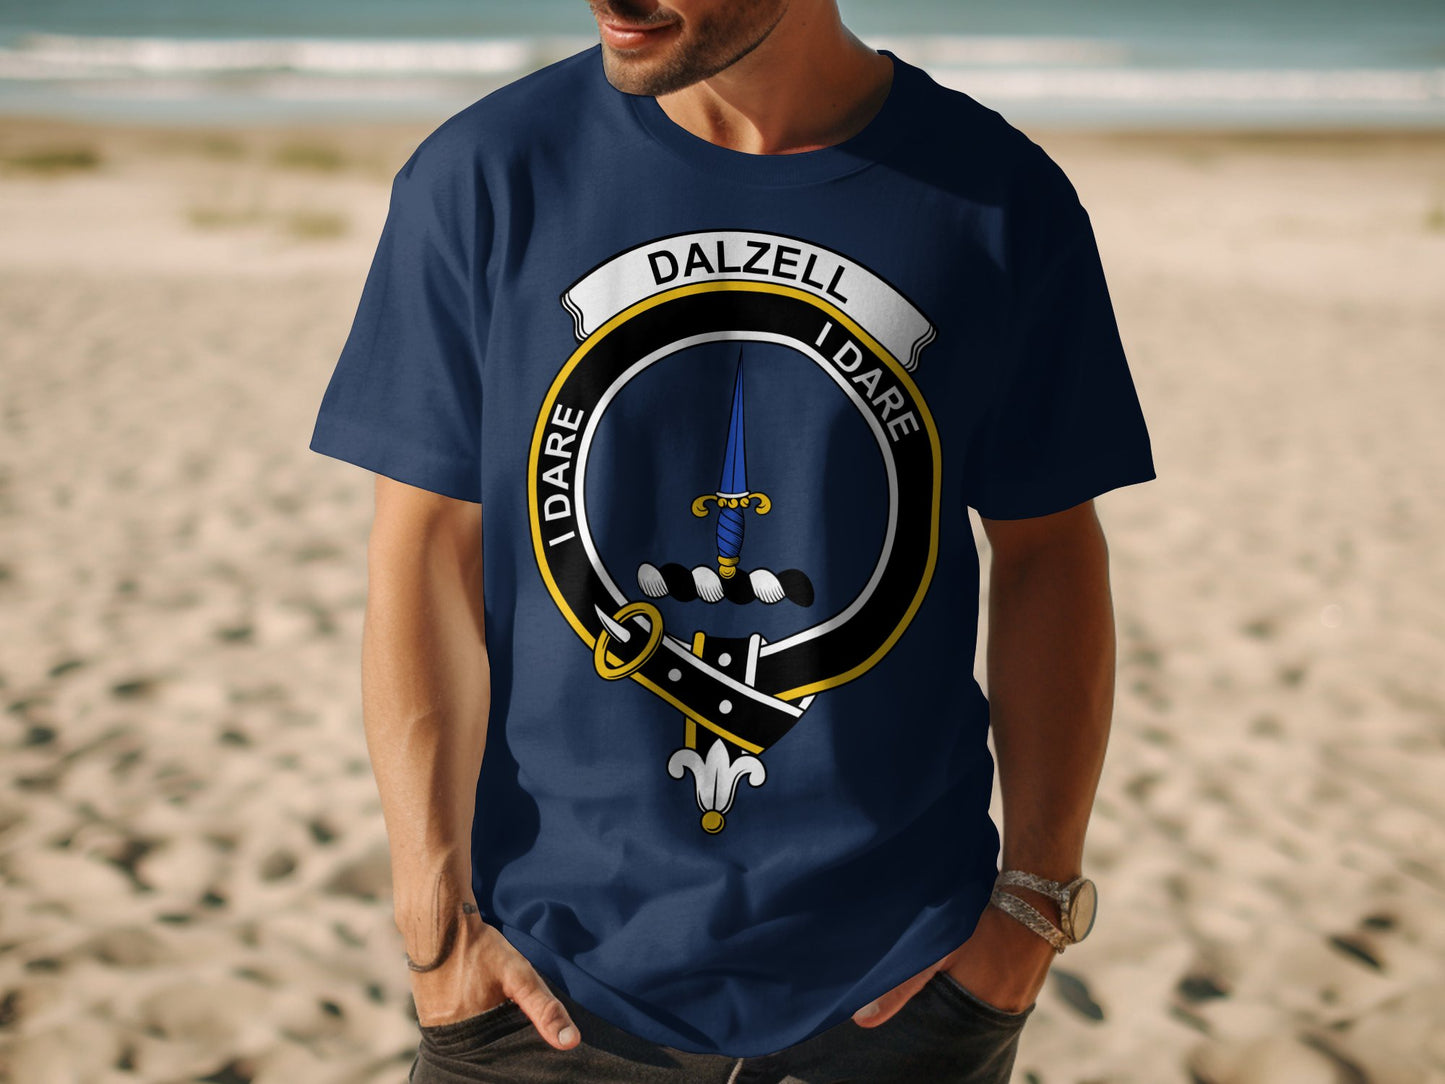 Dalzell Scottish Clan Crest Highland Games T-Shirt - Living Stone Gifts